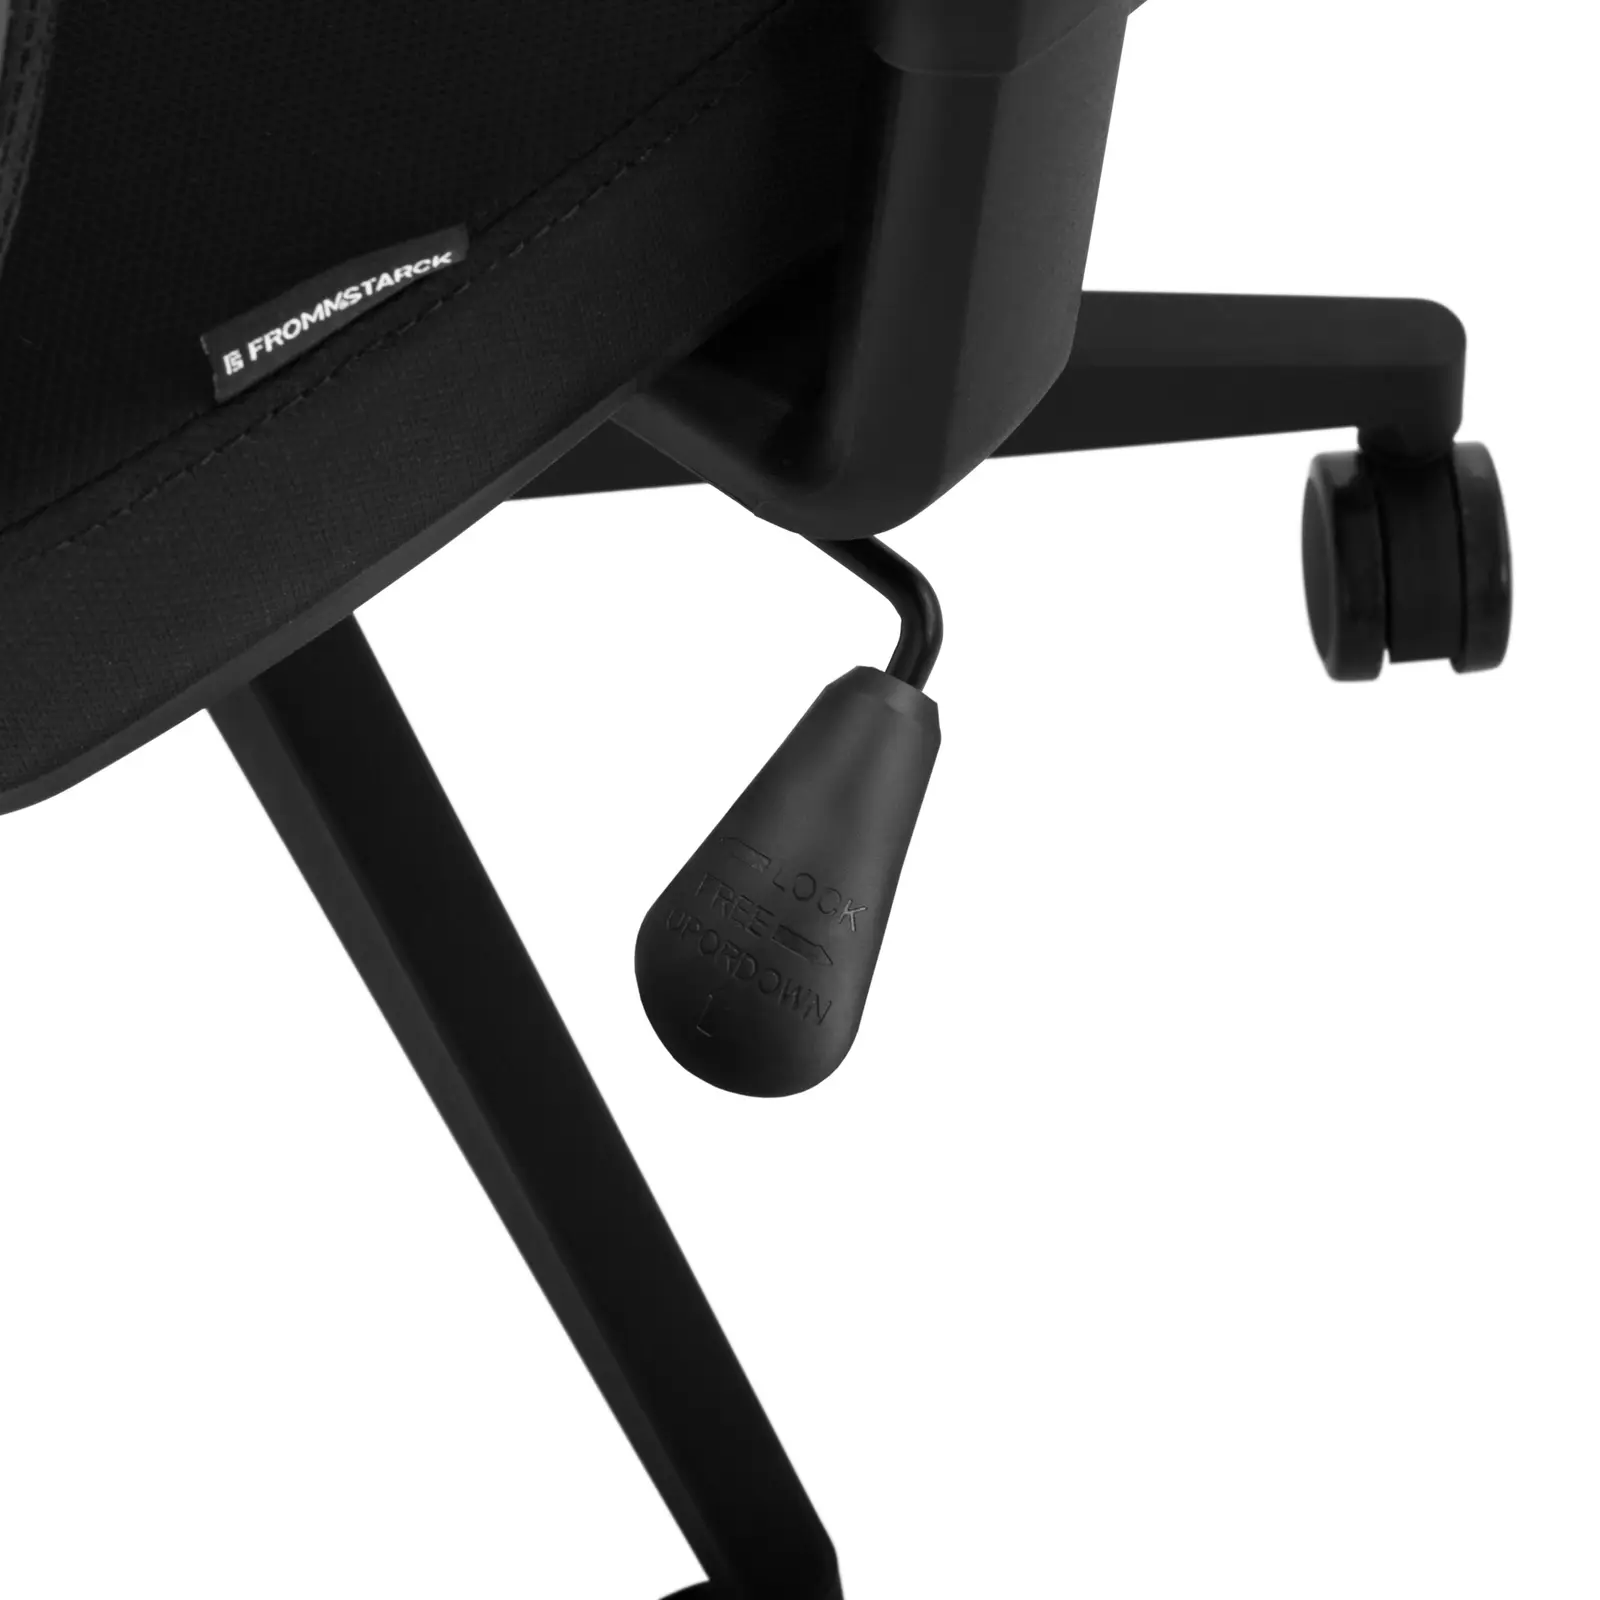 Office Chair - mesh back - lumbar support - 150 kg